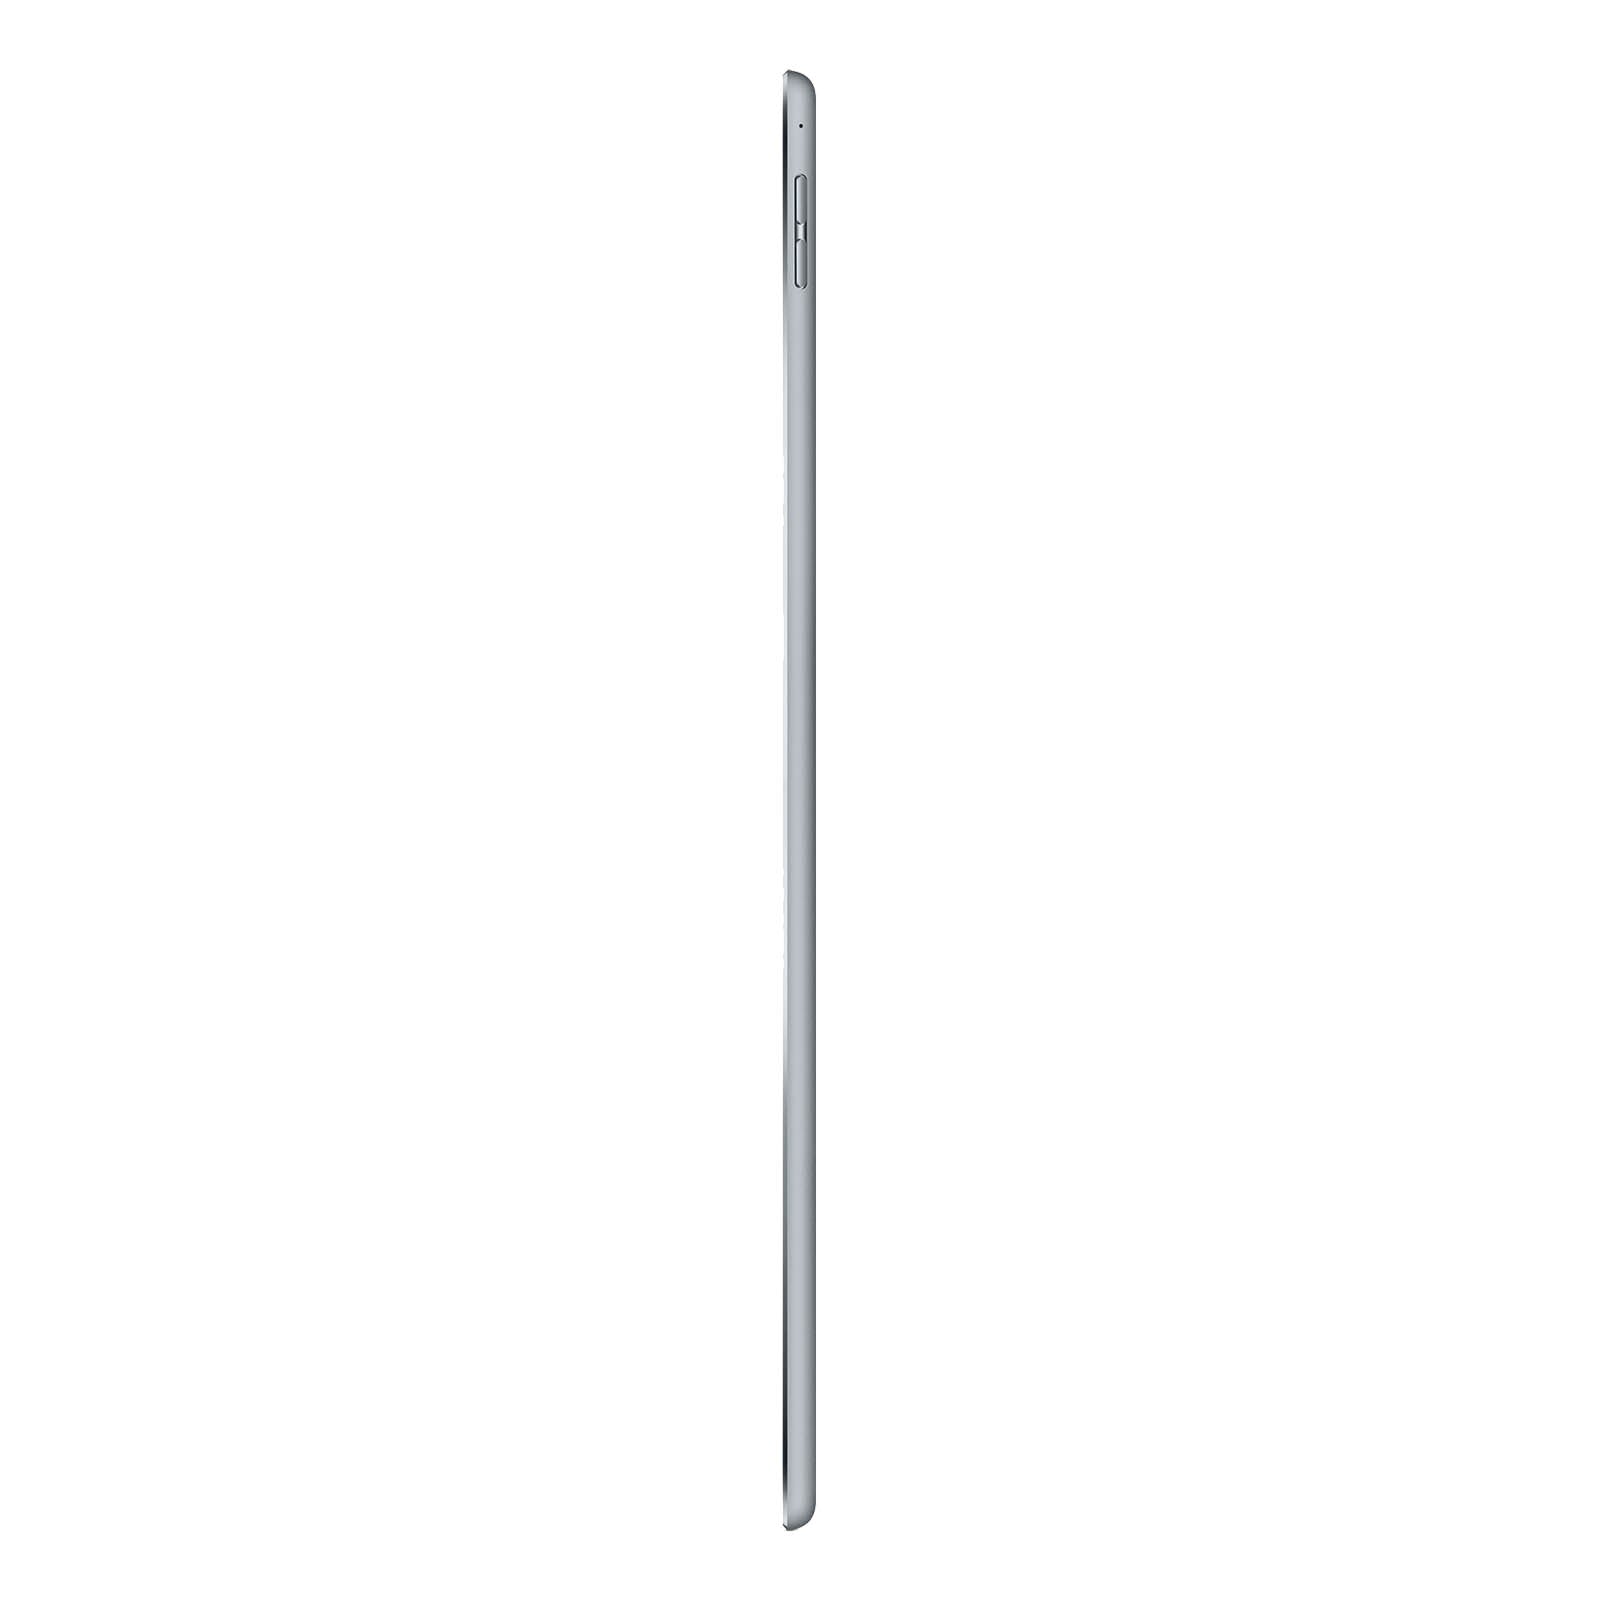 iPad Pro 12.9 Inch 2nd Gen 64GB Space Grey Good - Unlocked